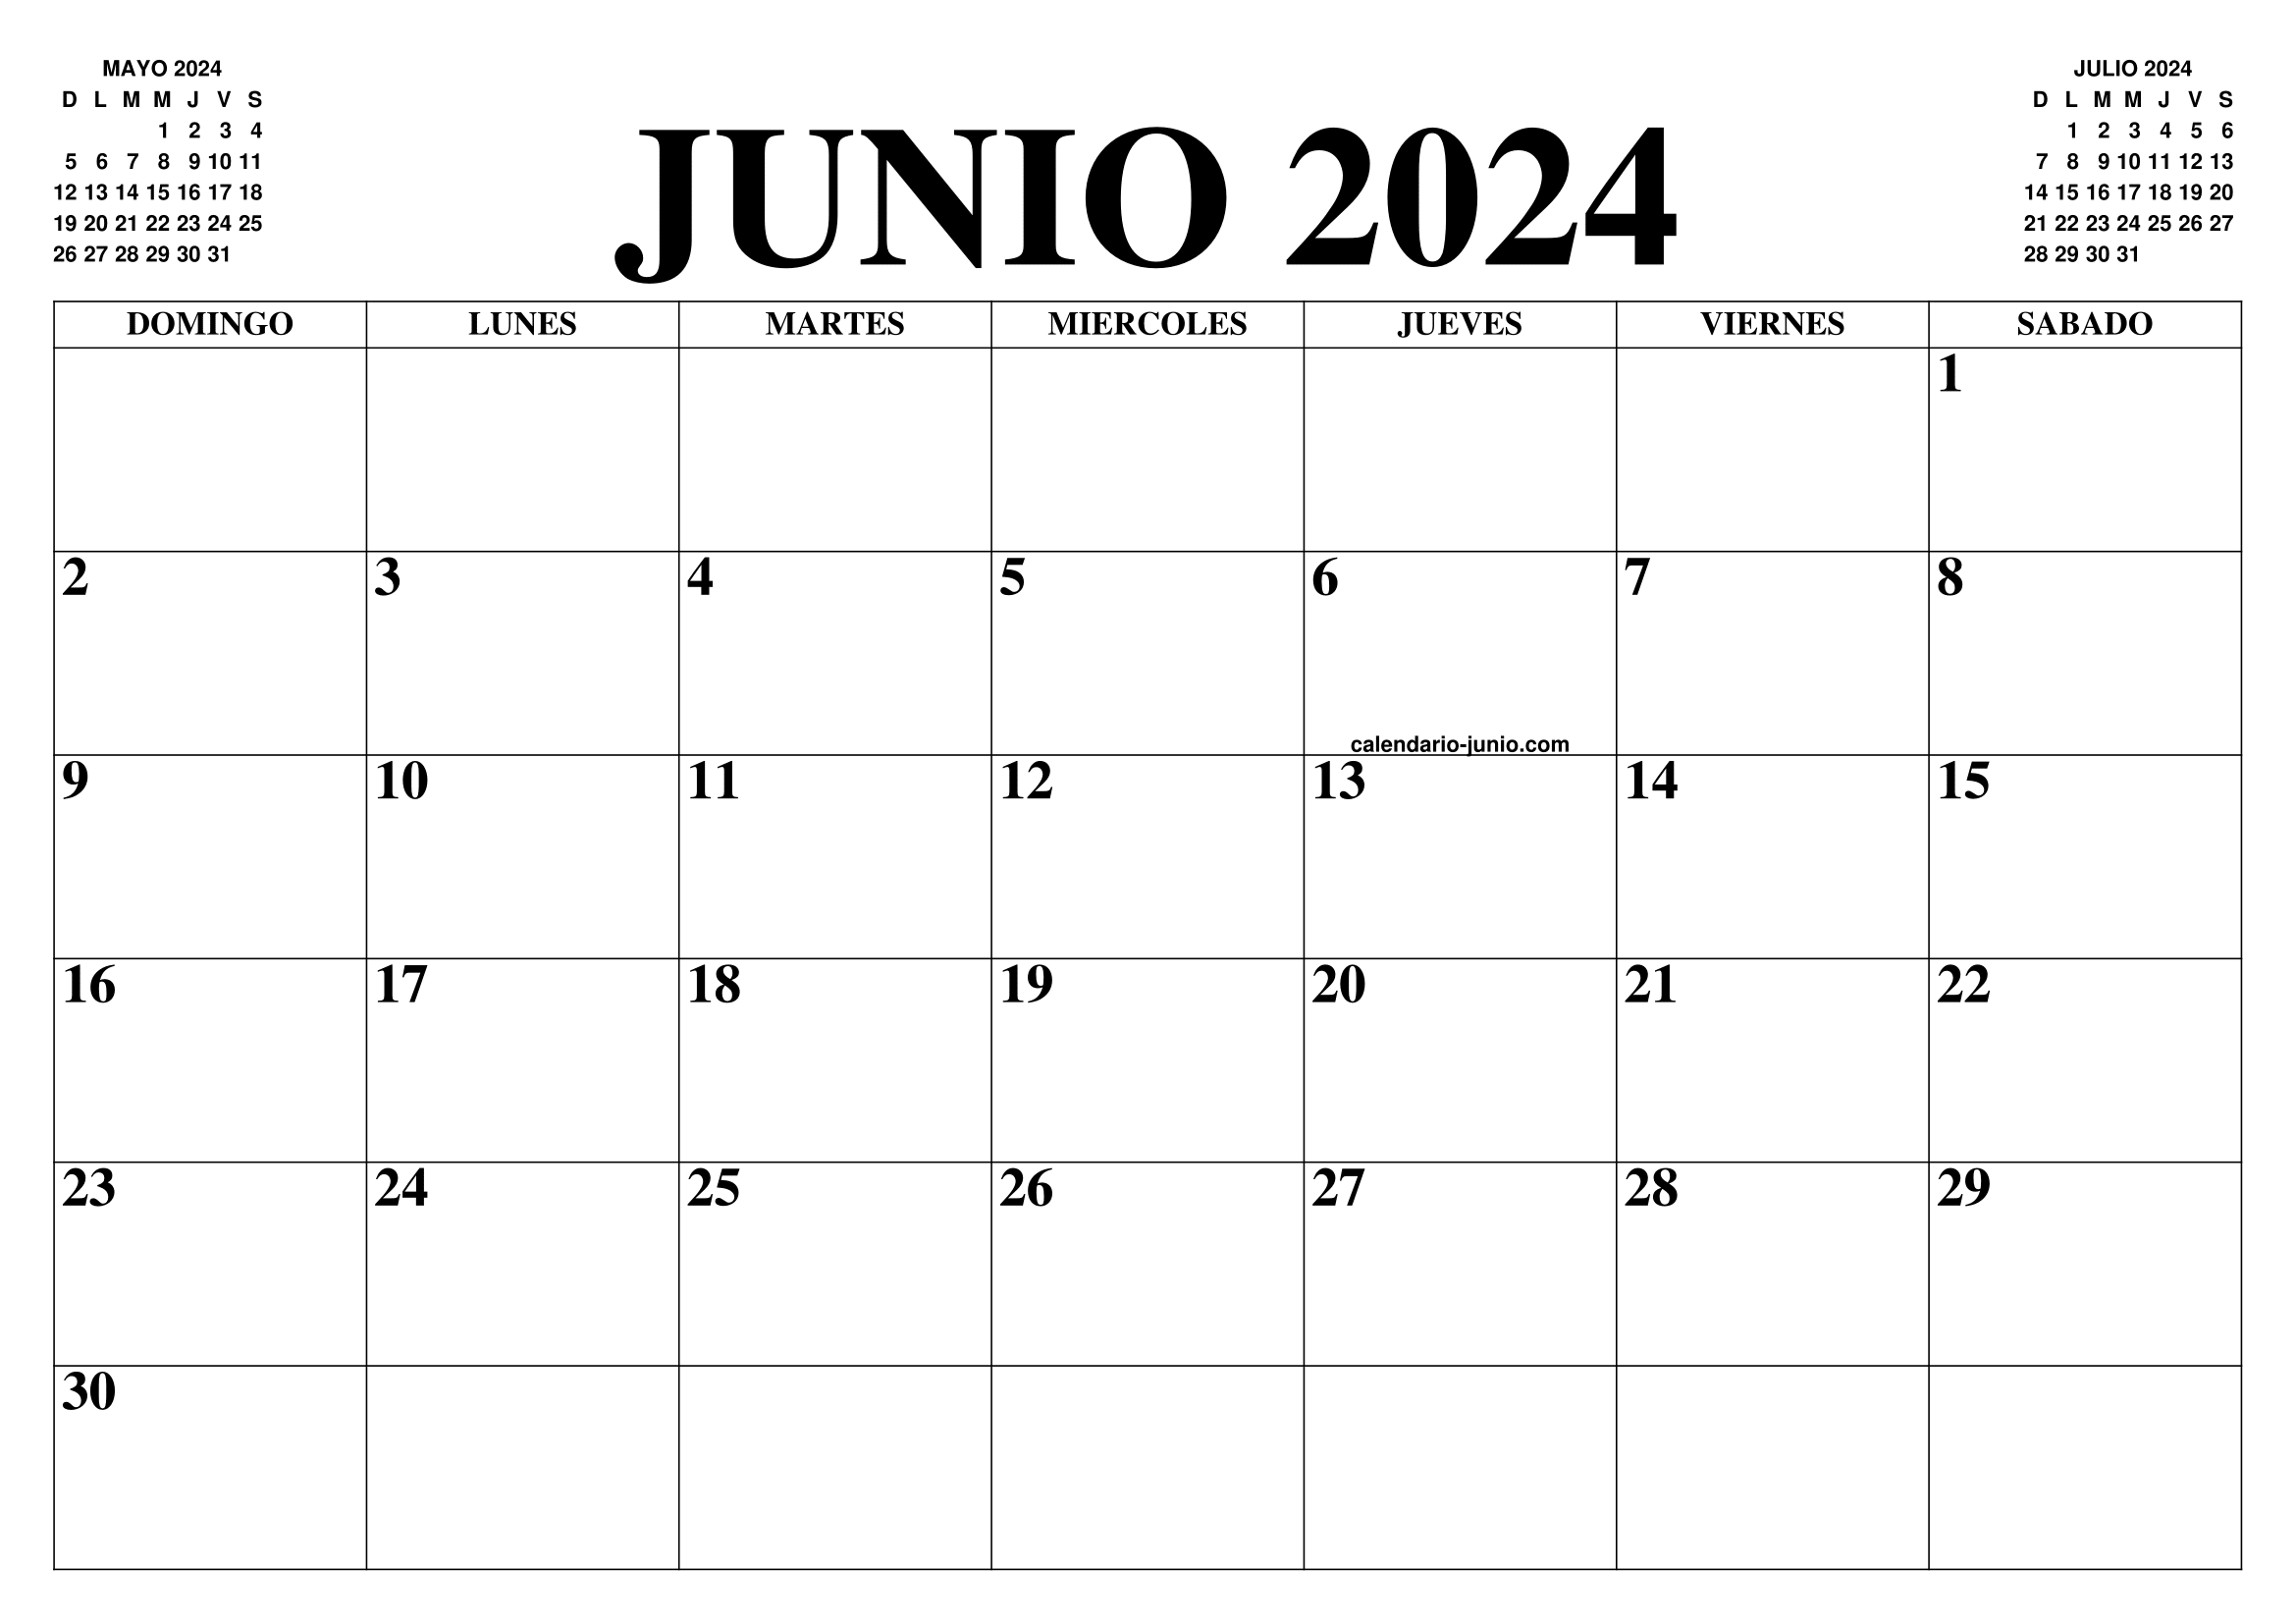 CALENDARIO JUNIO 2024 EL CALENDARIO JUNIO 2024 PARA IMPRIMIR GRATIS